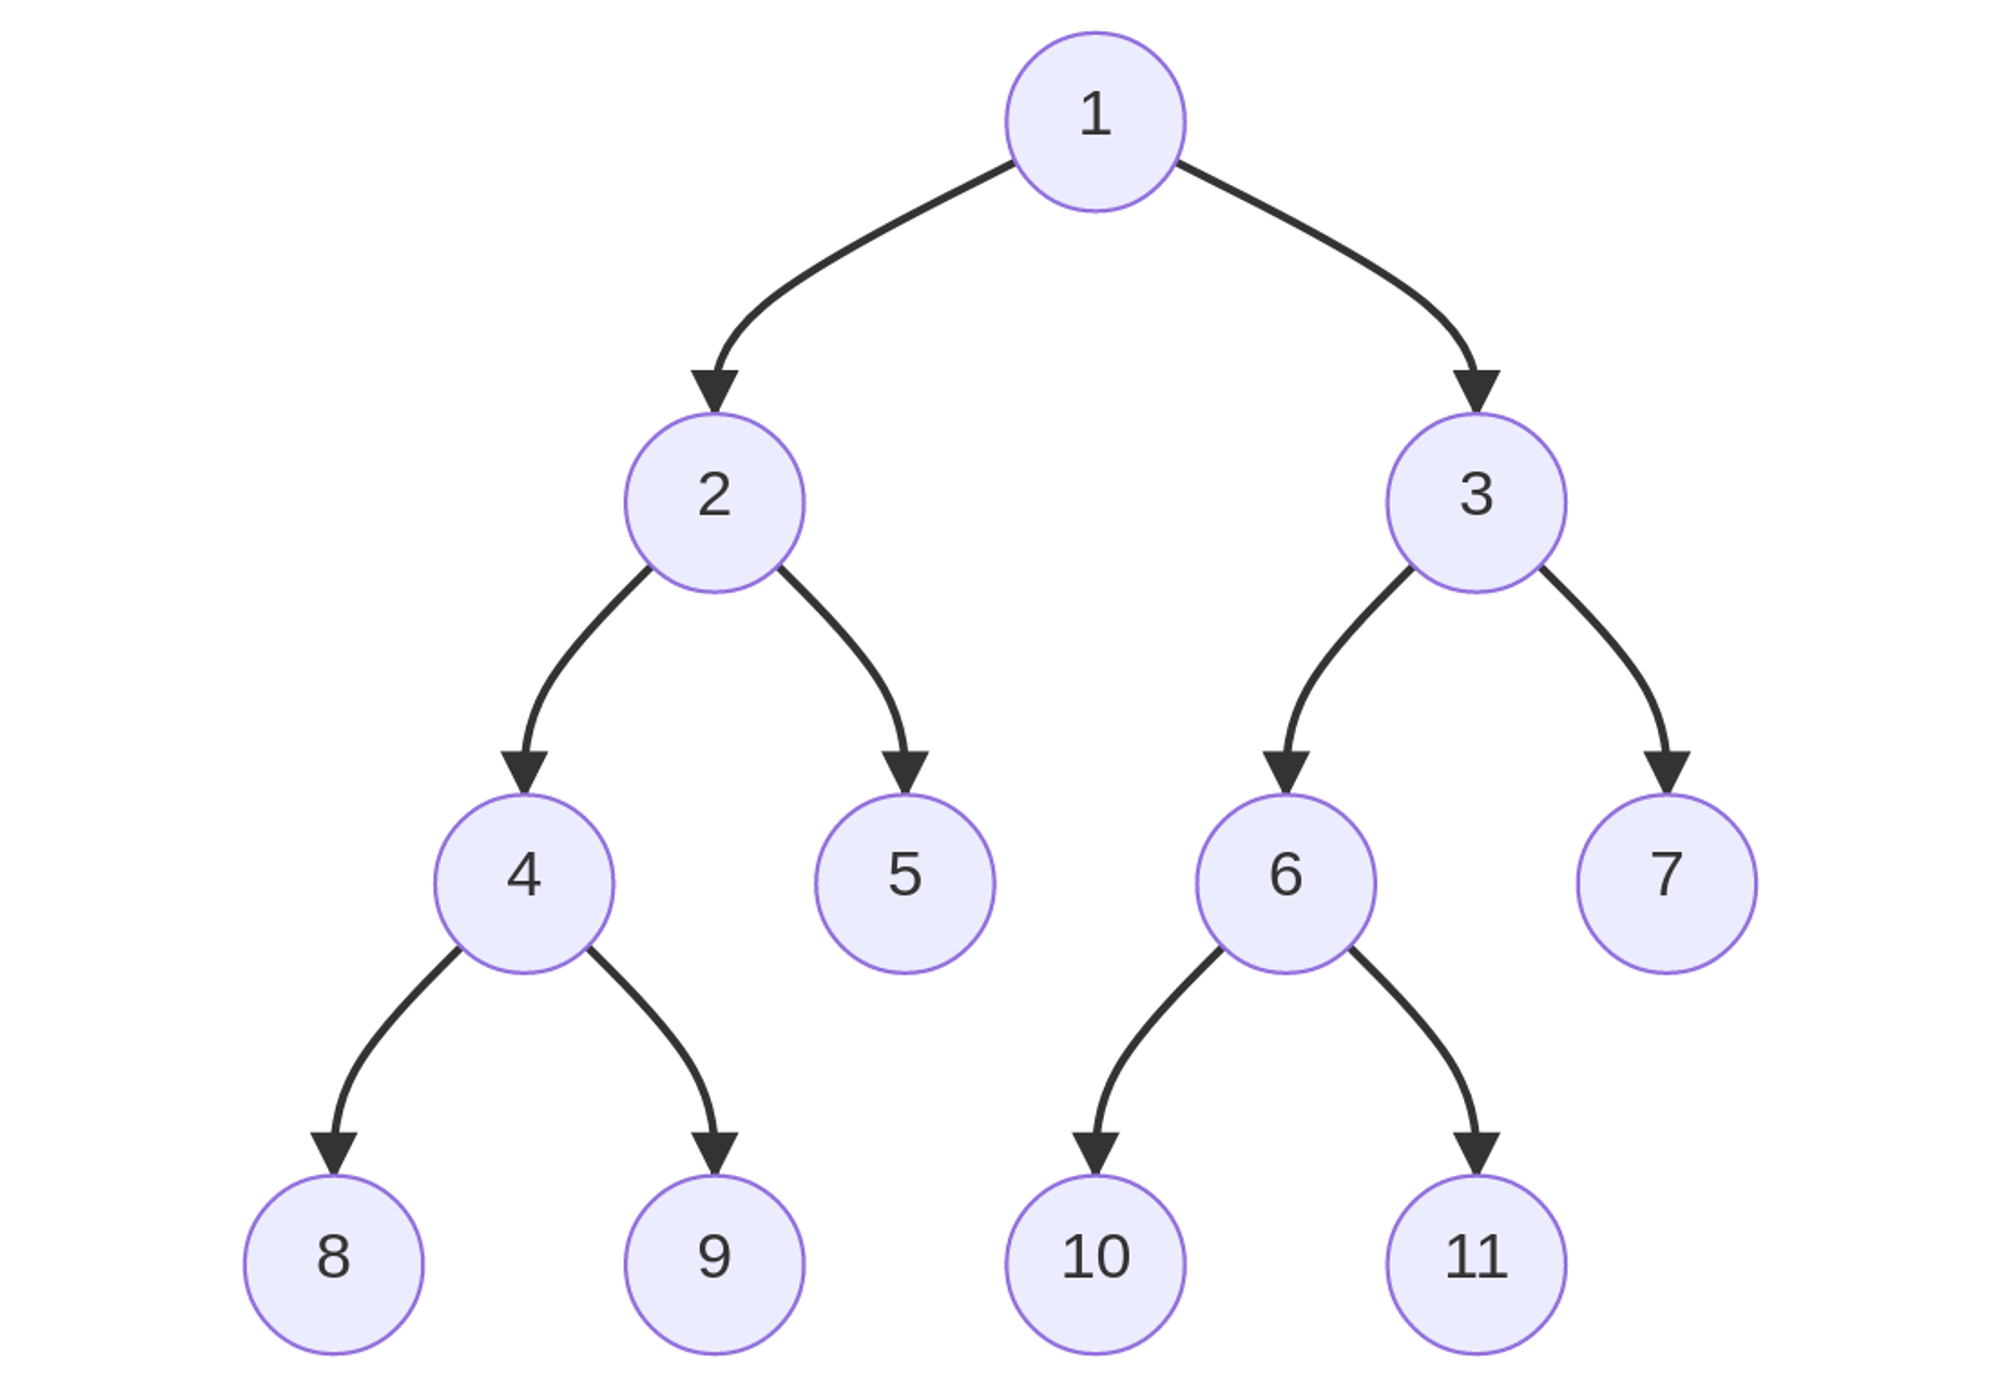 Strict/Full Binary Tree